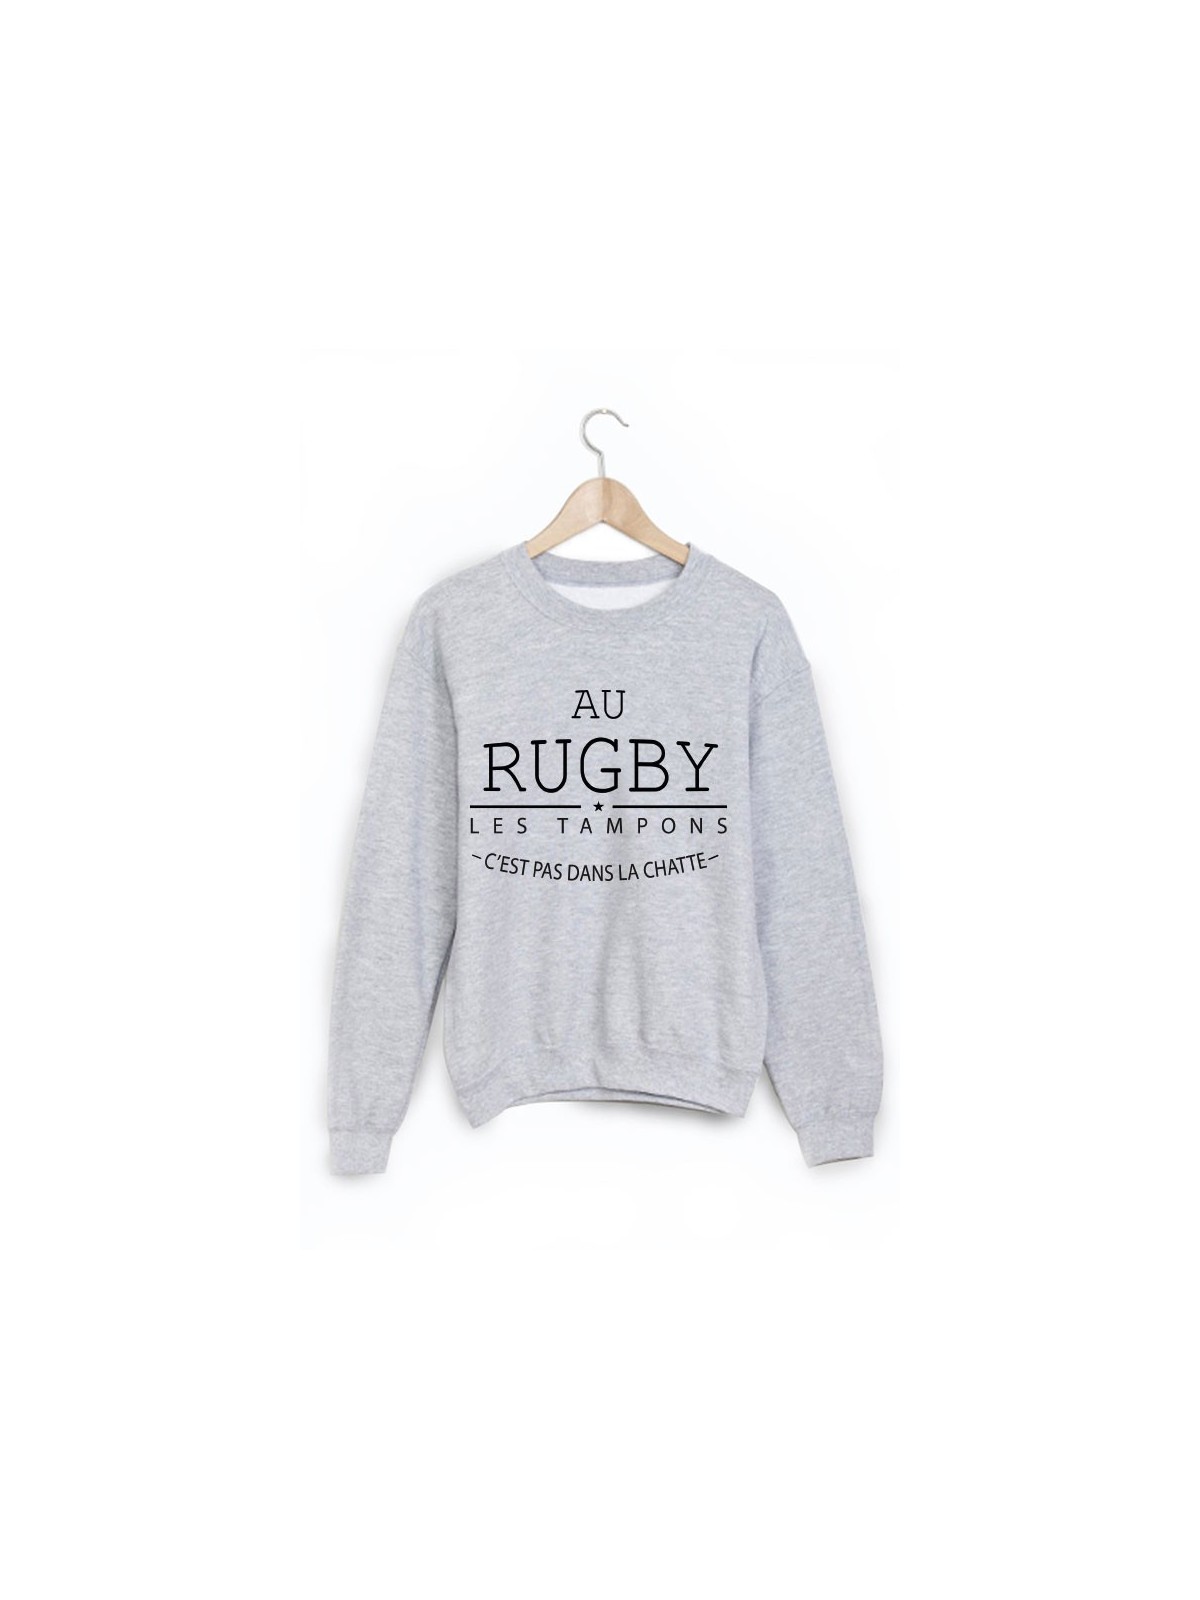 Sweat-Shirt citation rugby ref 1611